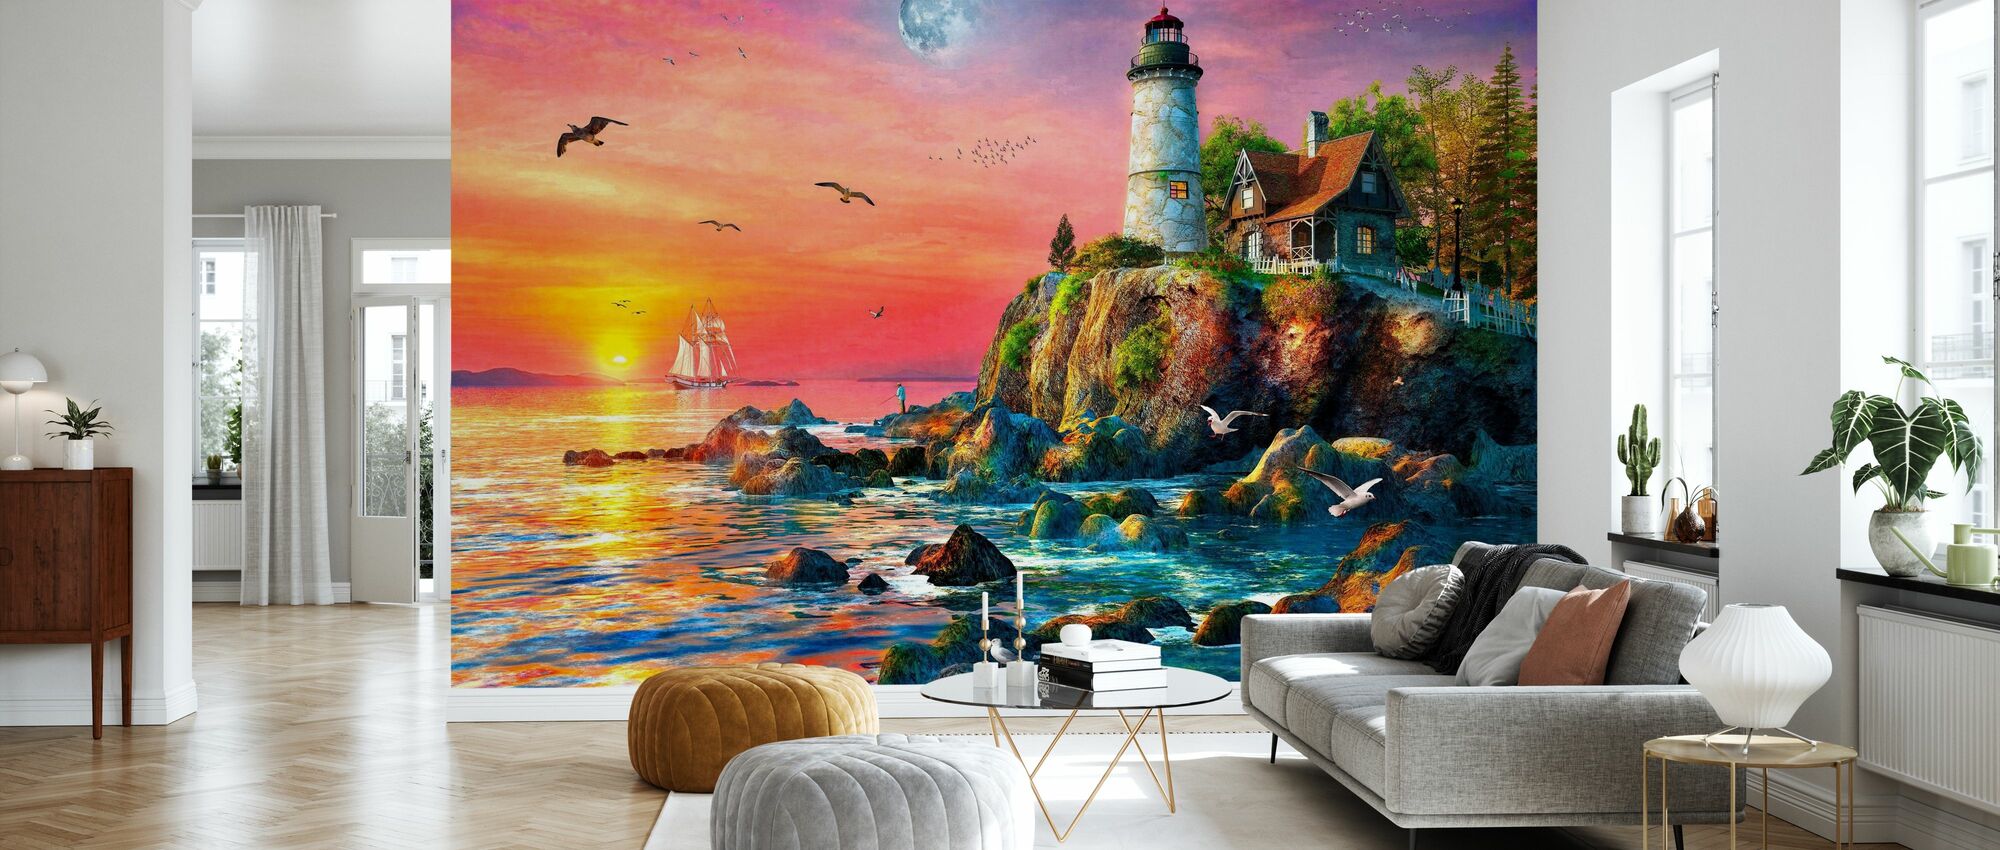 Summer Sunset Lighthouse Affordable Wall Mural Photowall